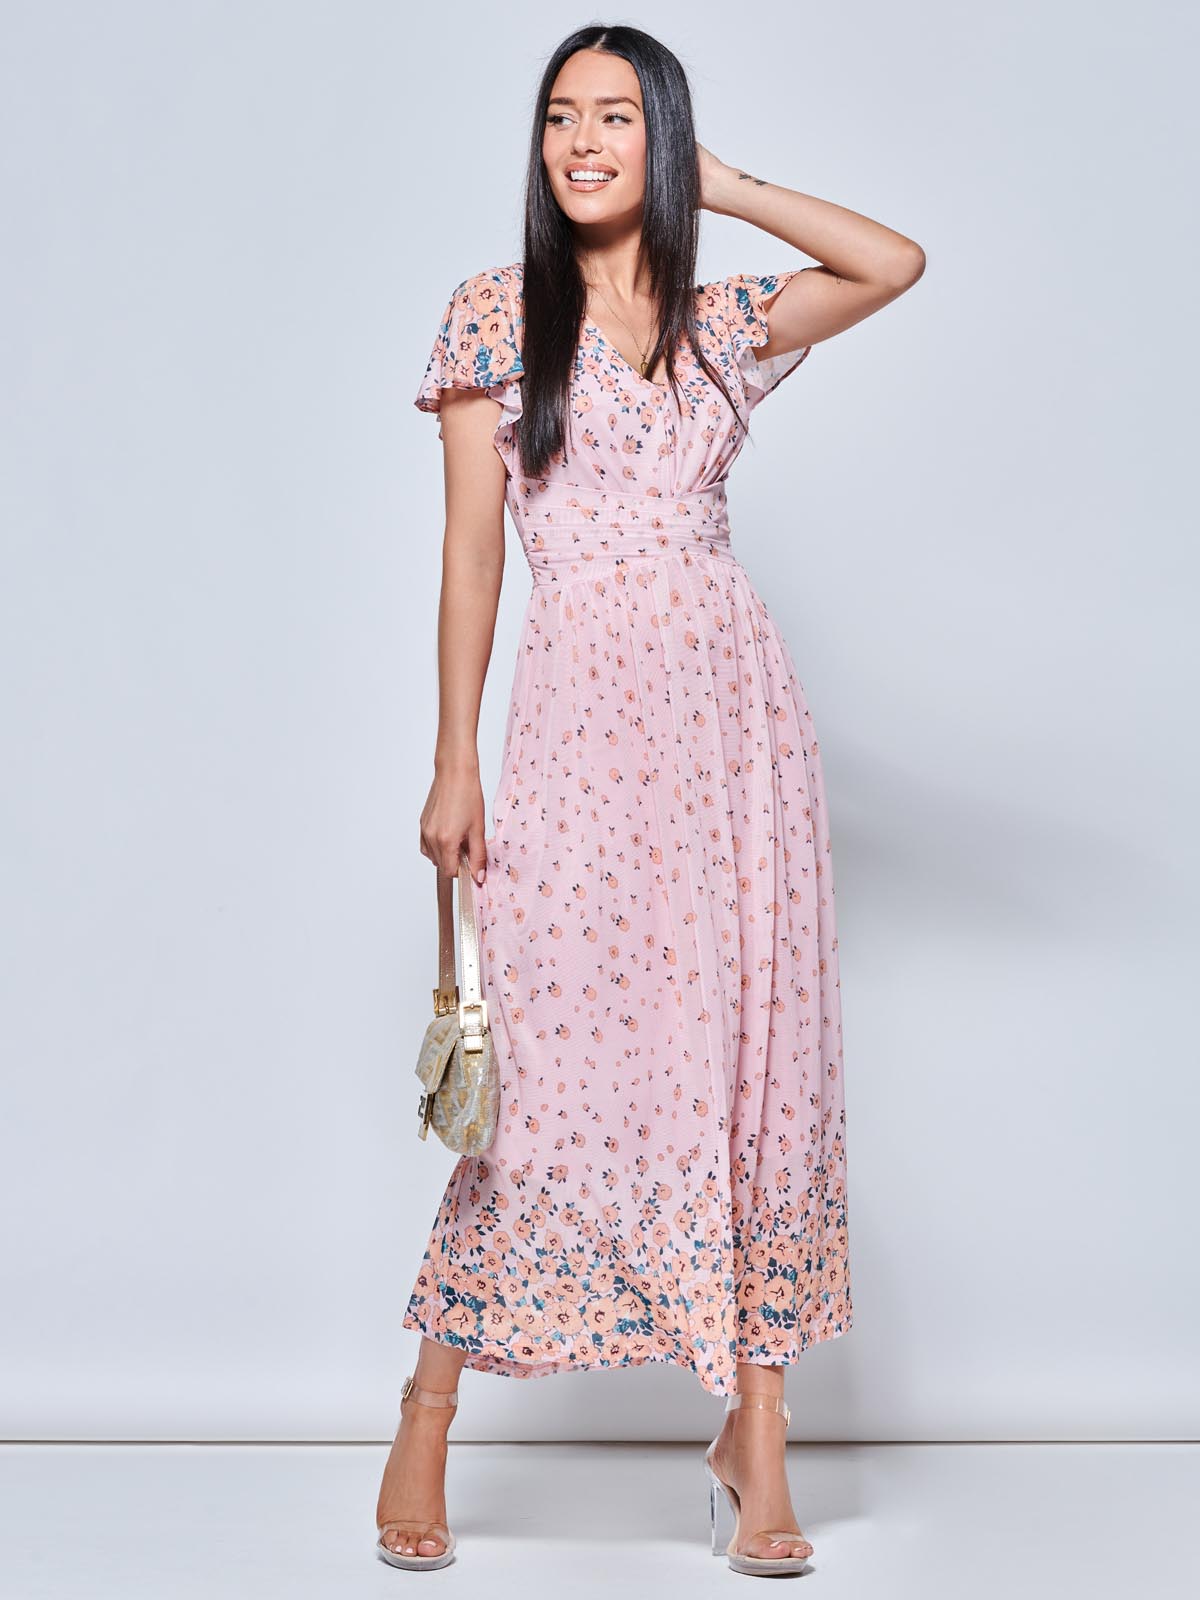 Mirrored Floral Print Mesh Maxi Dress, Pink Multi